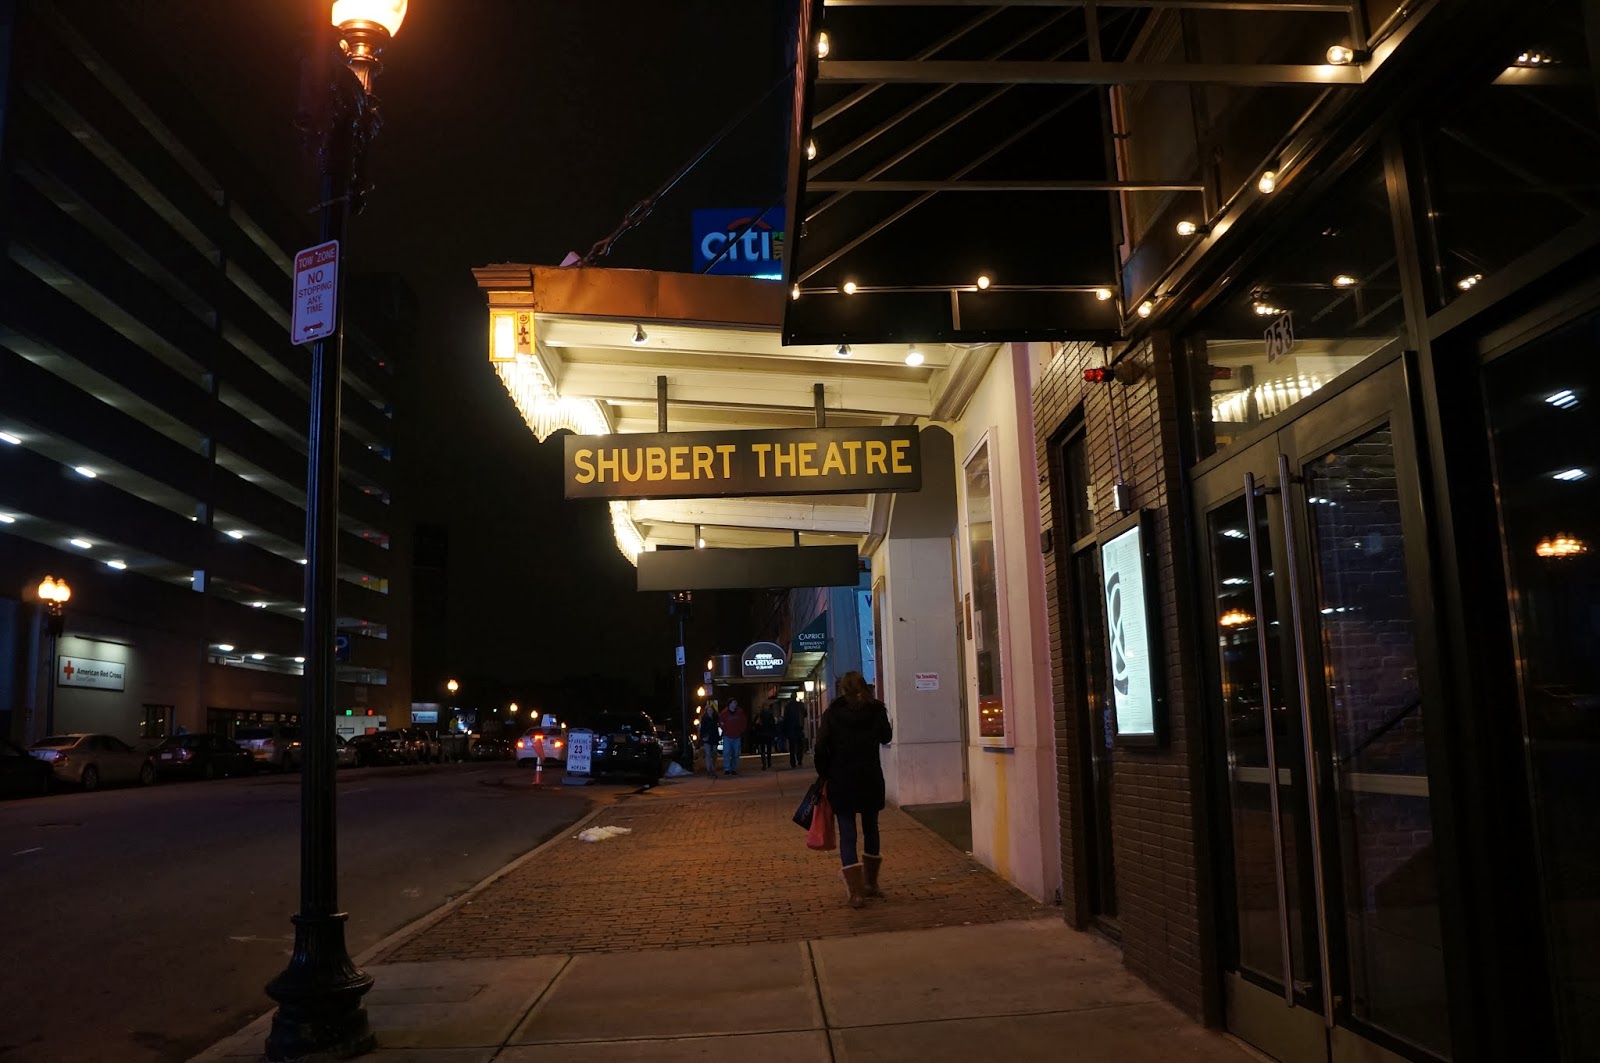 Shubert Theatre in Boston